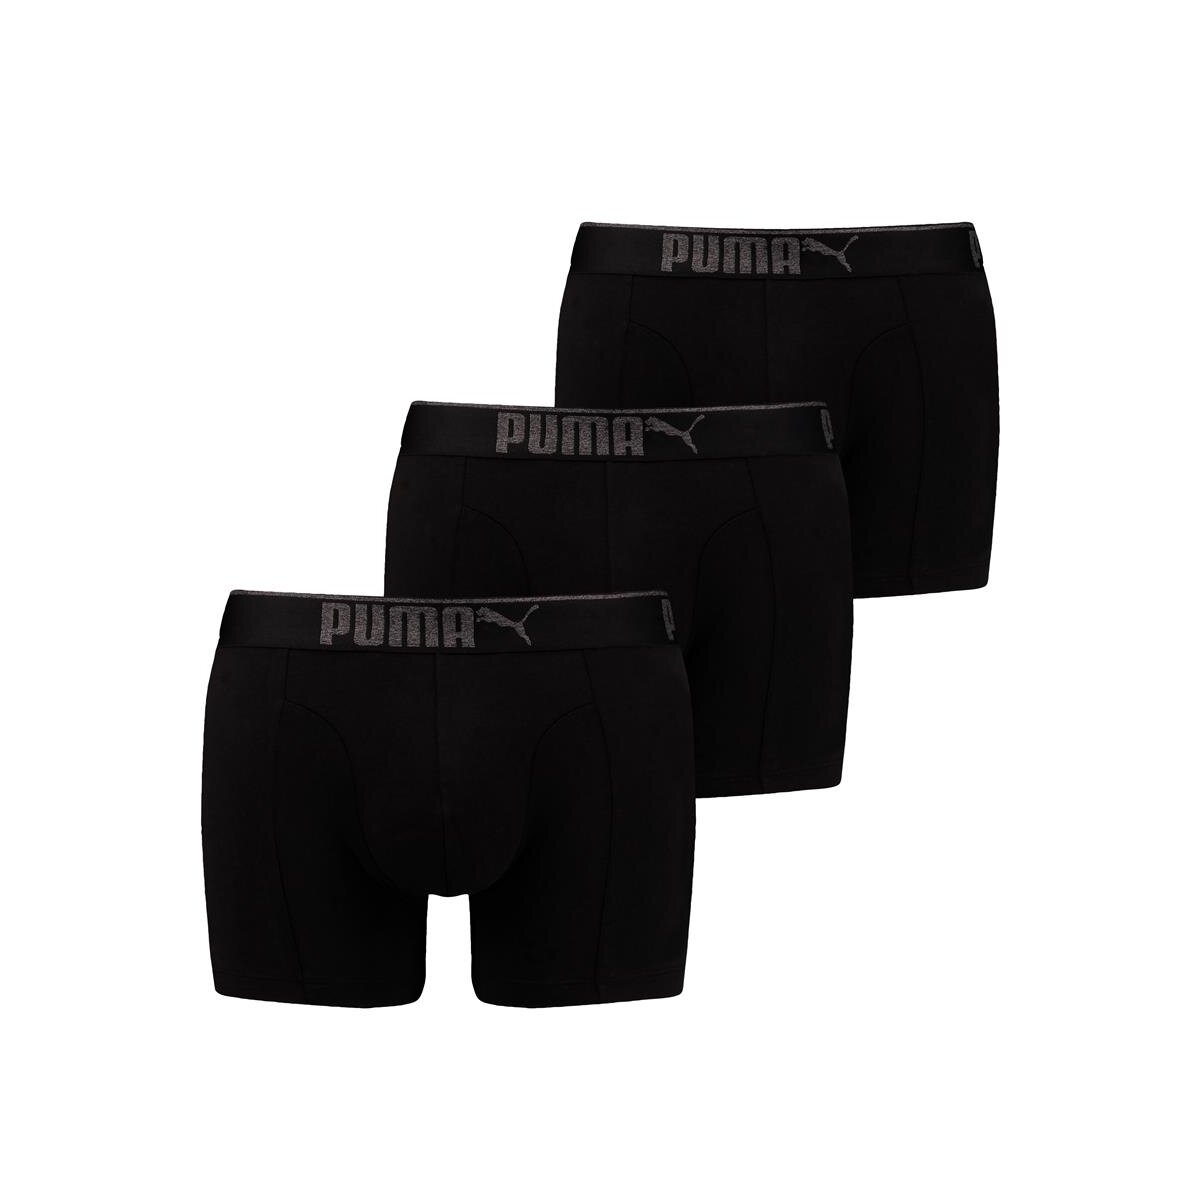 PUMA Herren Boxer Shorts - 3er Pack, 30,95 €